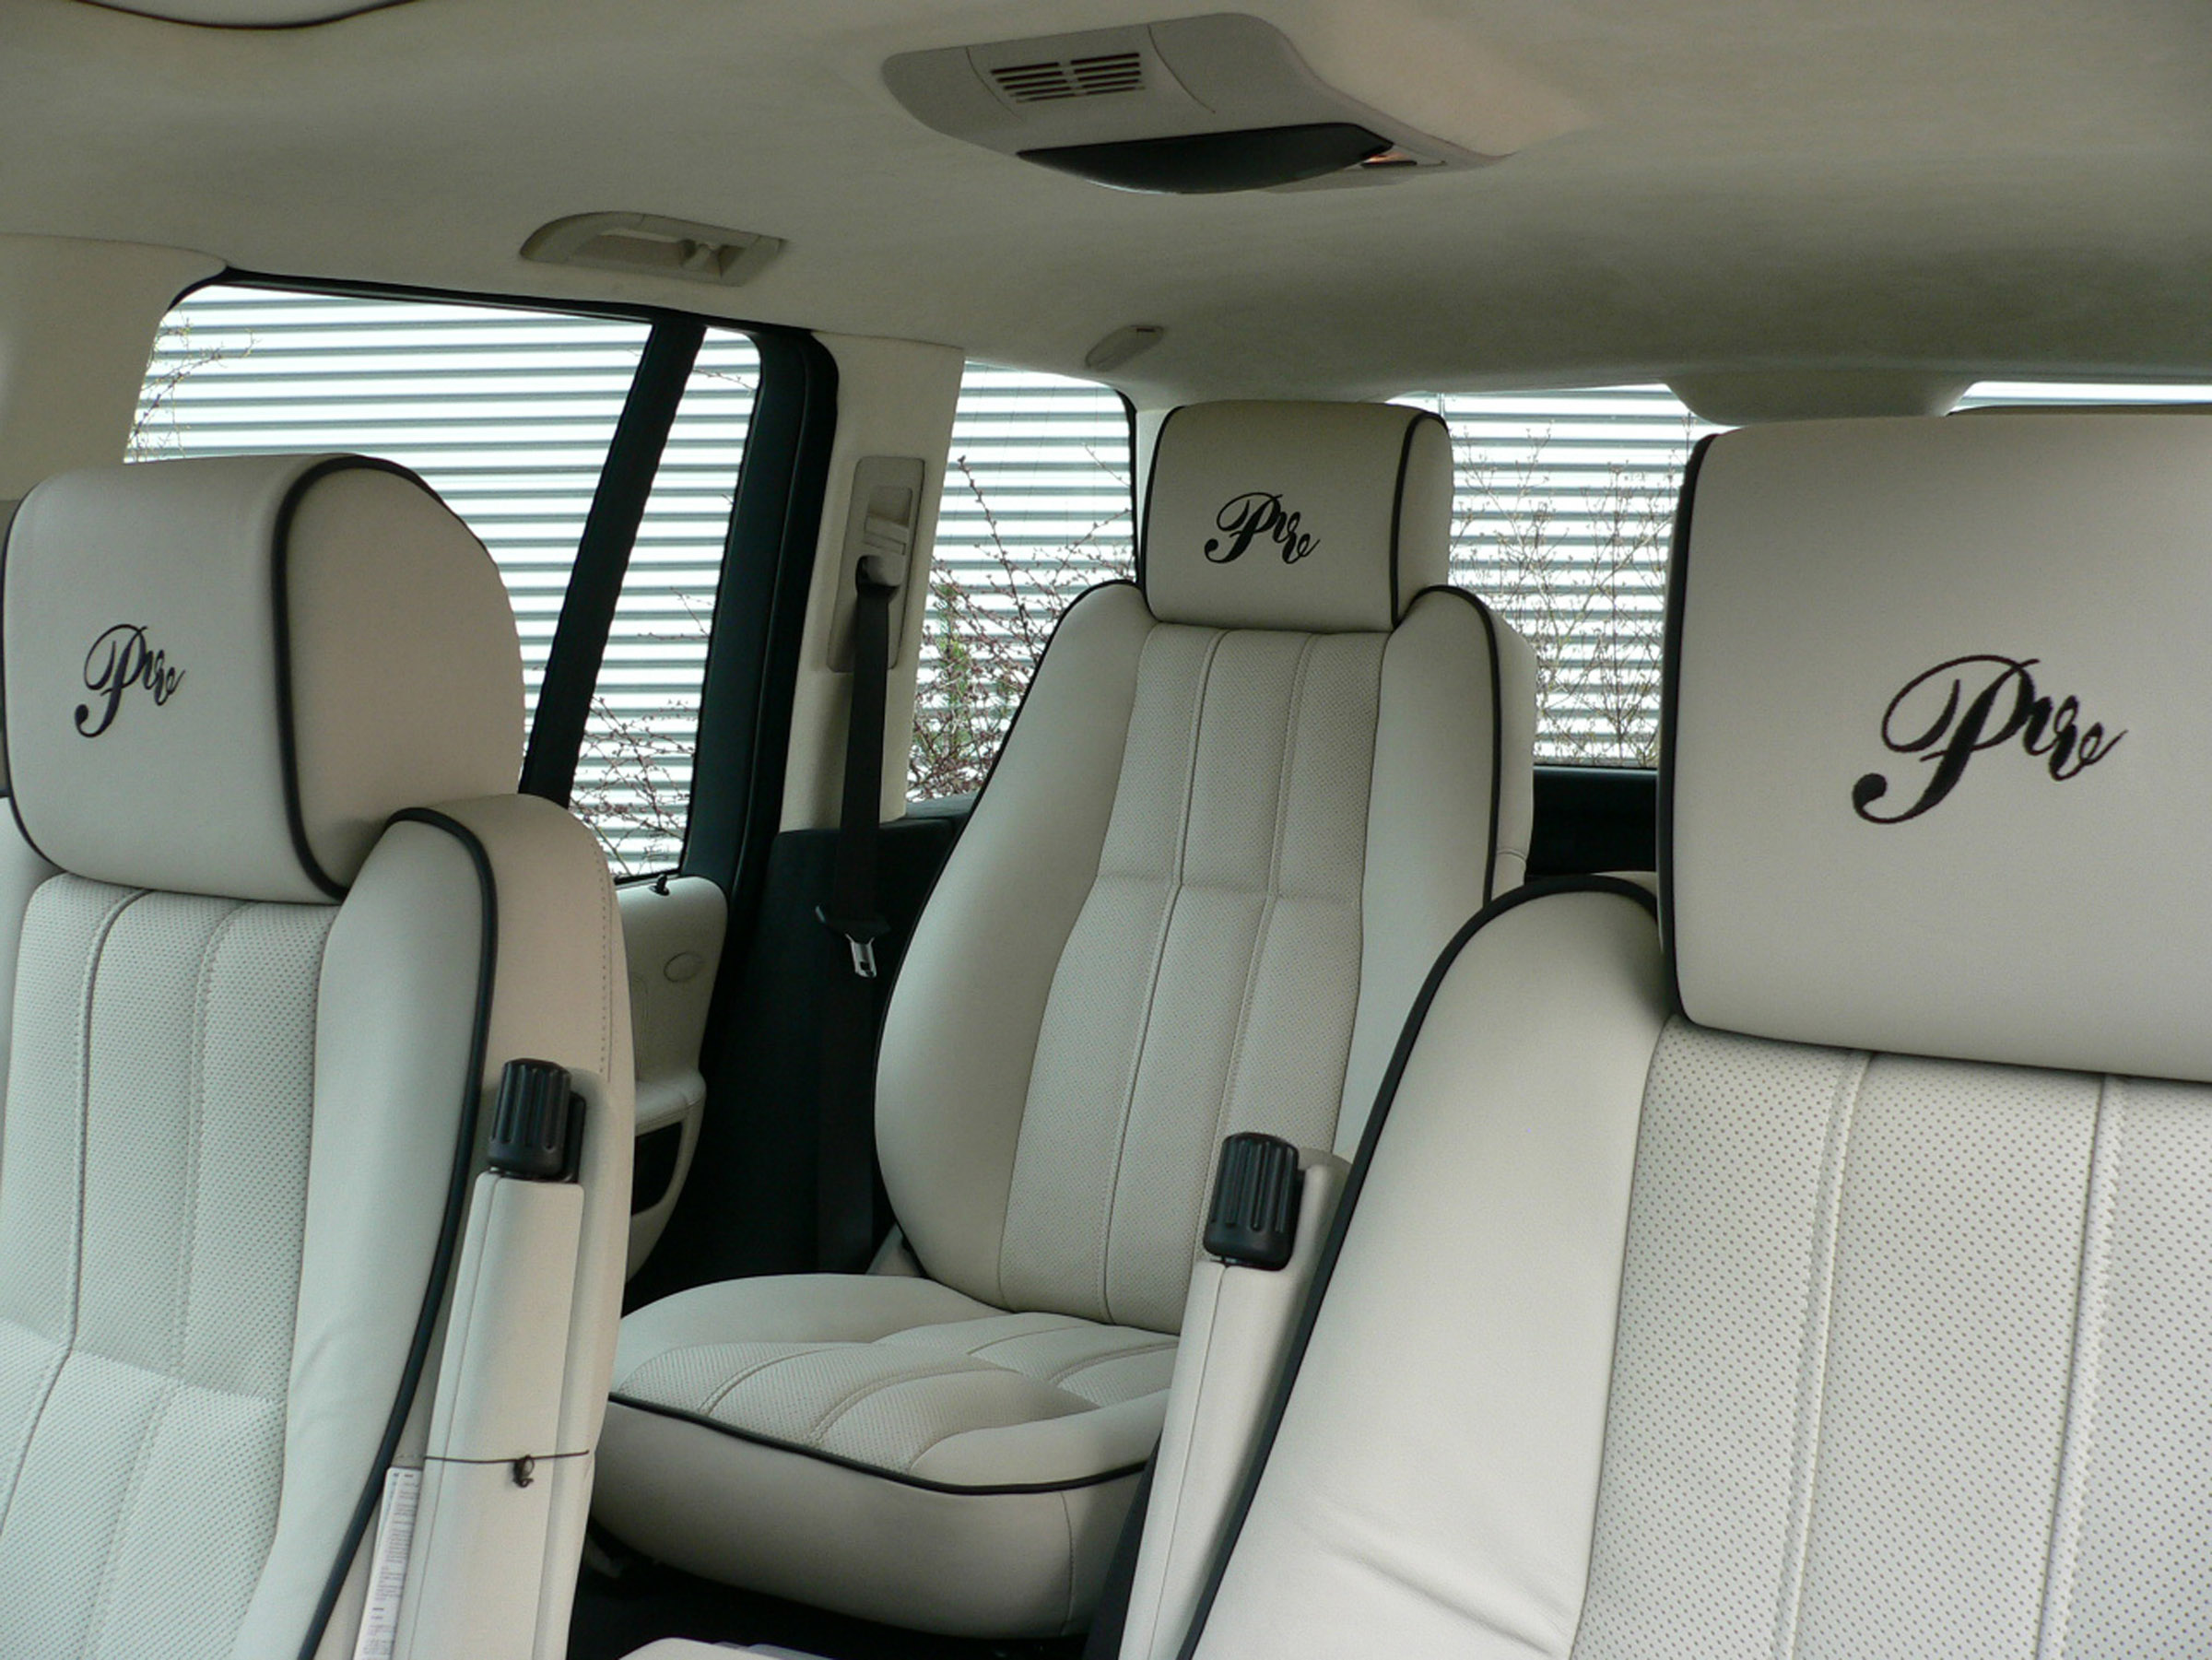 ART Range Rover single seat system